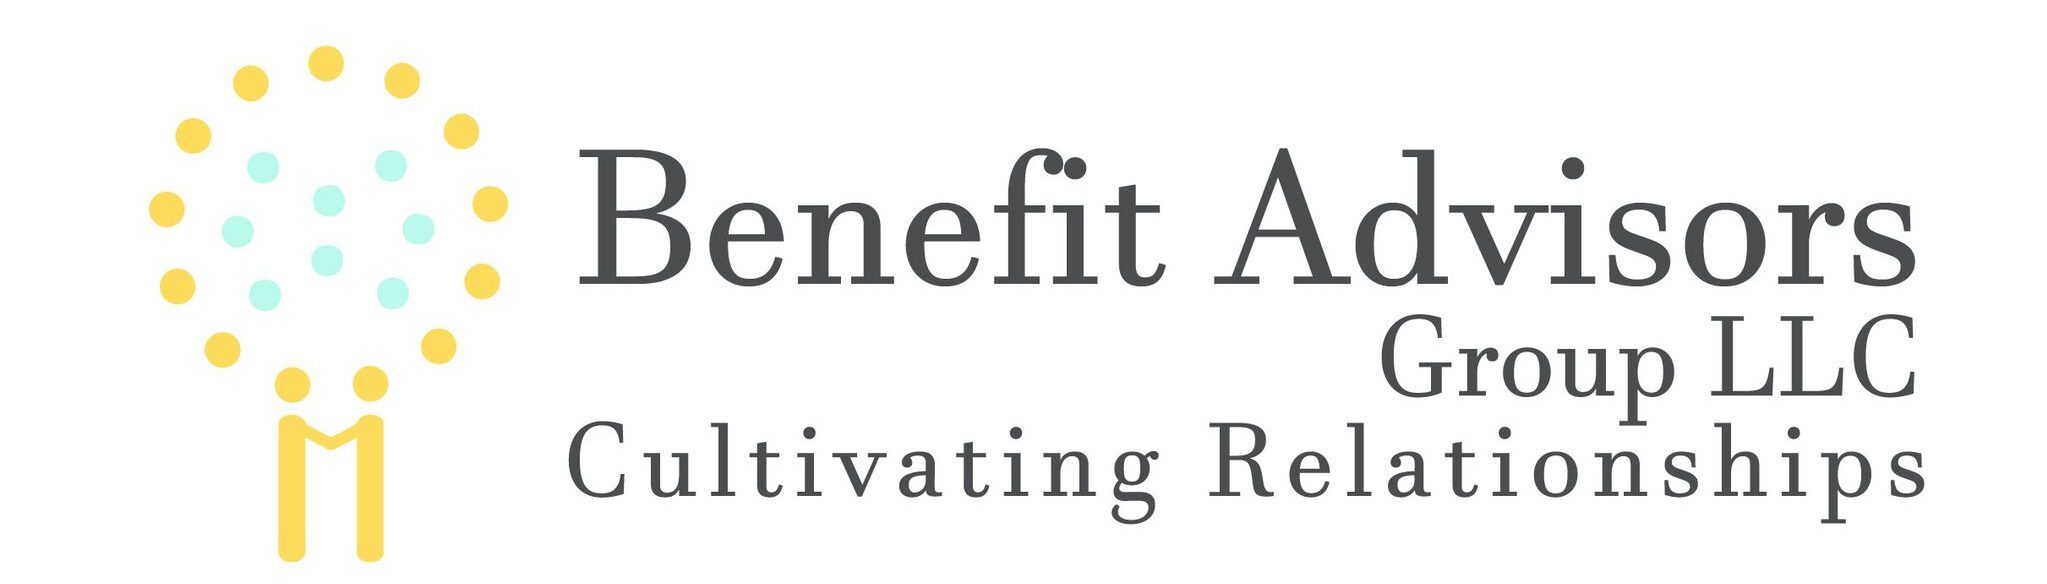 Benefit Advisors Group LLC